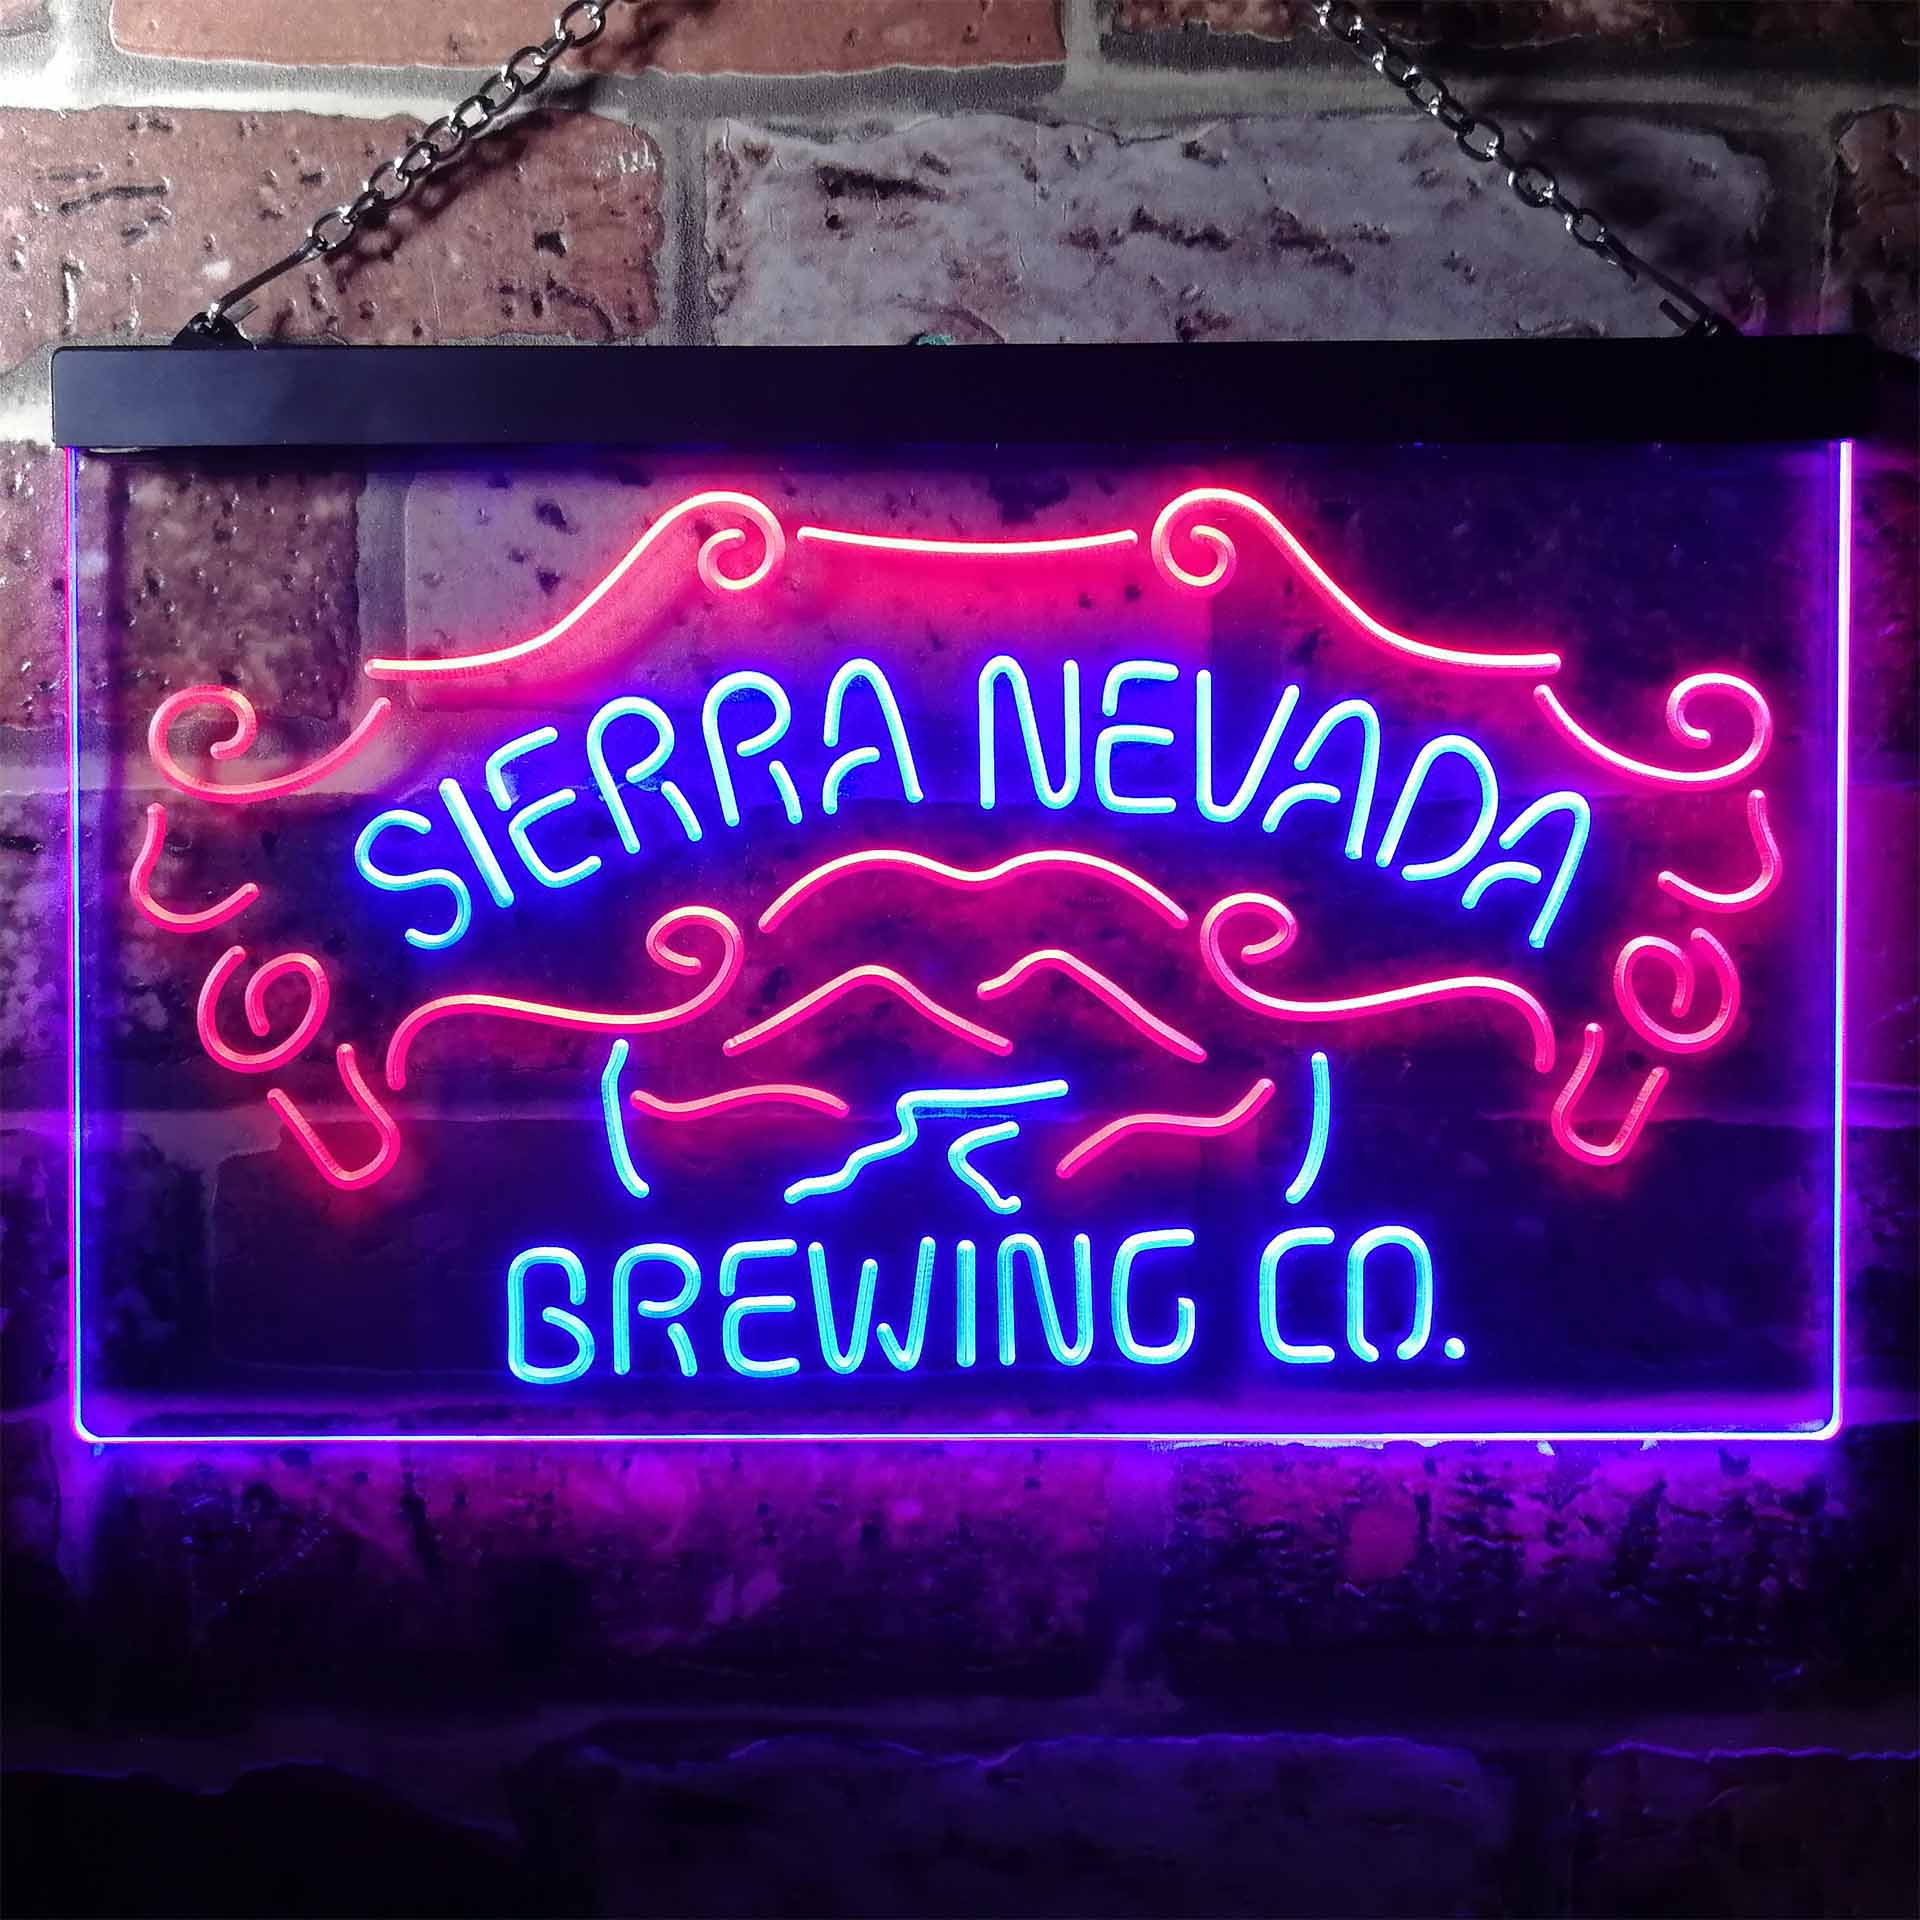 Beer Pub Bar Neon Light Sign 24"x20" New SIERRA NEVADA BREWING CO 